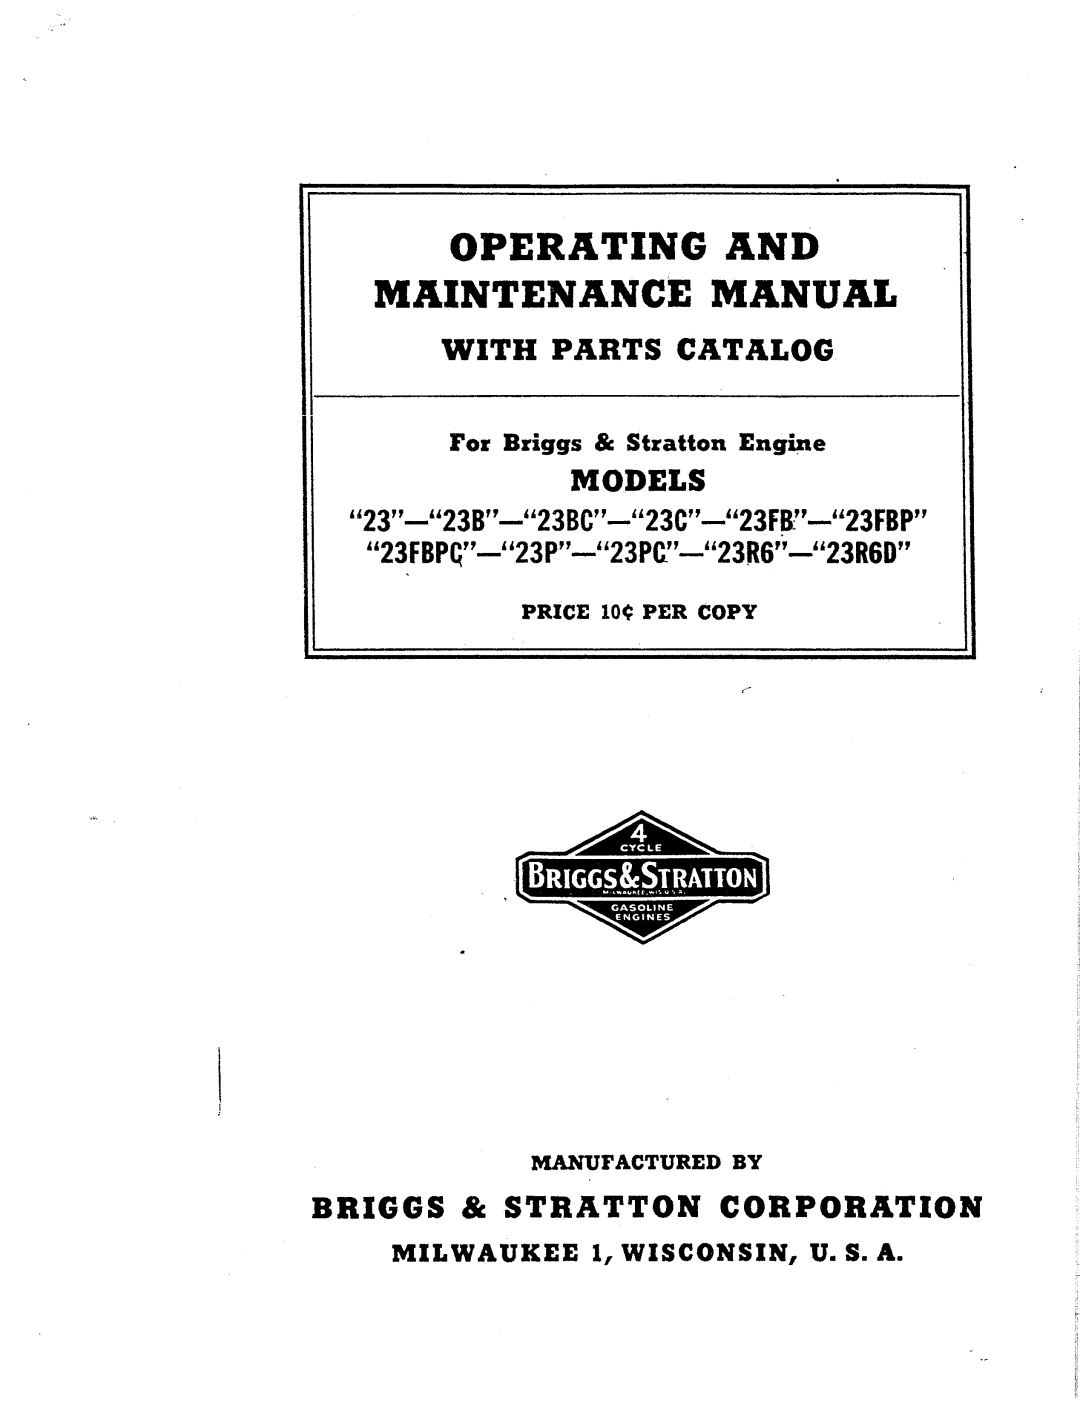 Briggs & Stratton 23R6D, 23PC, 23FBPC, 23C, 23BC manual 